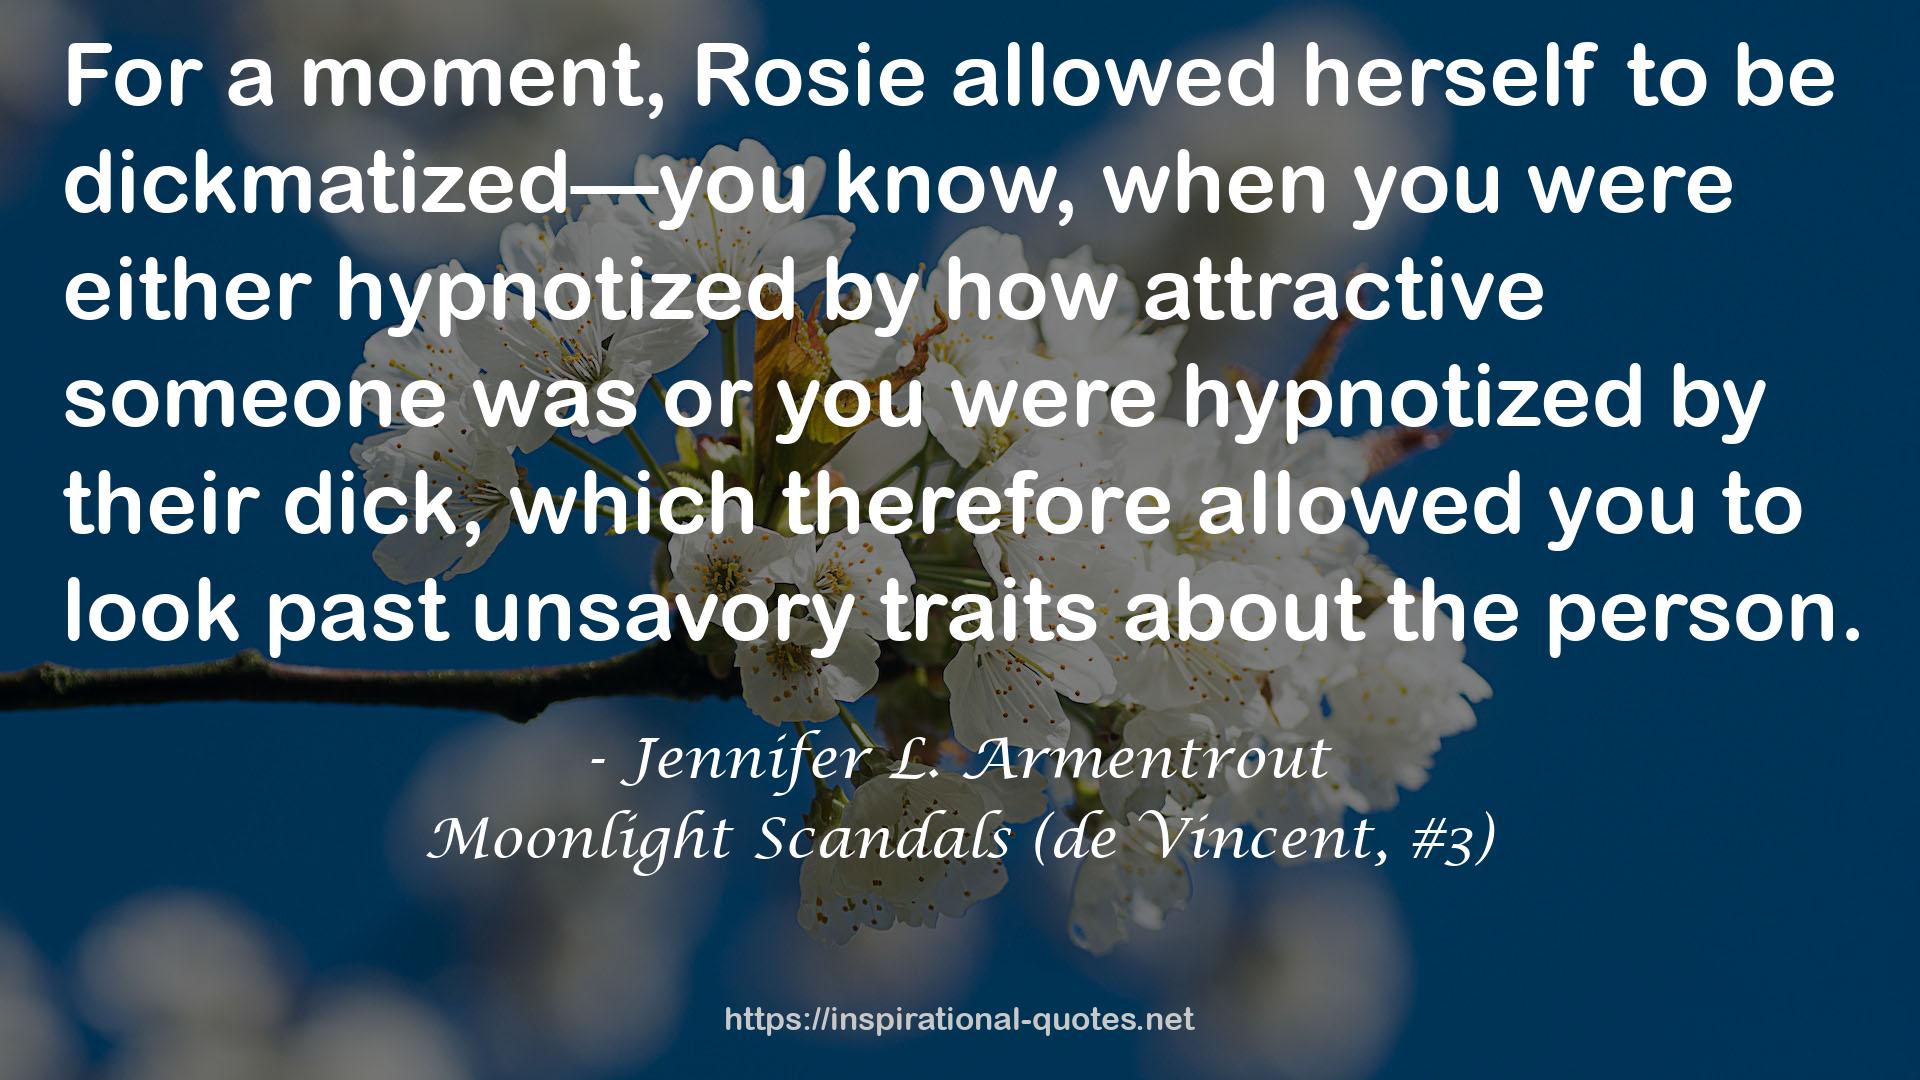 Moonlight Scandals (de Vincent, #3) QUOTES